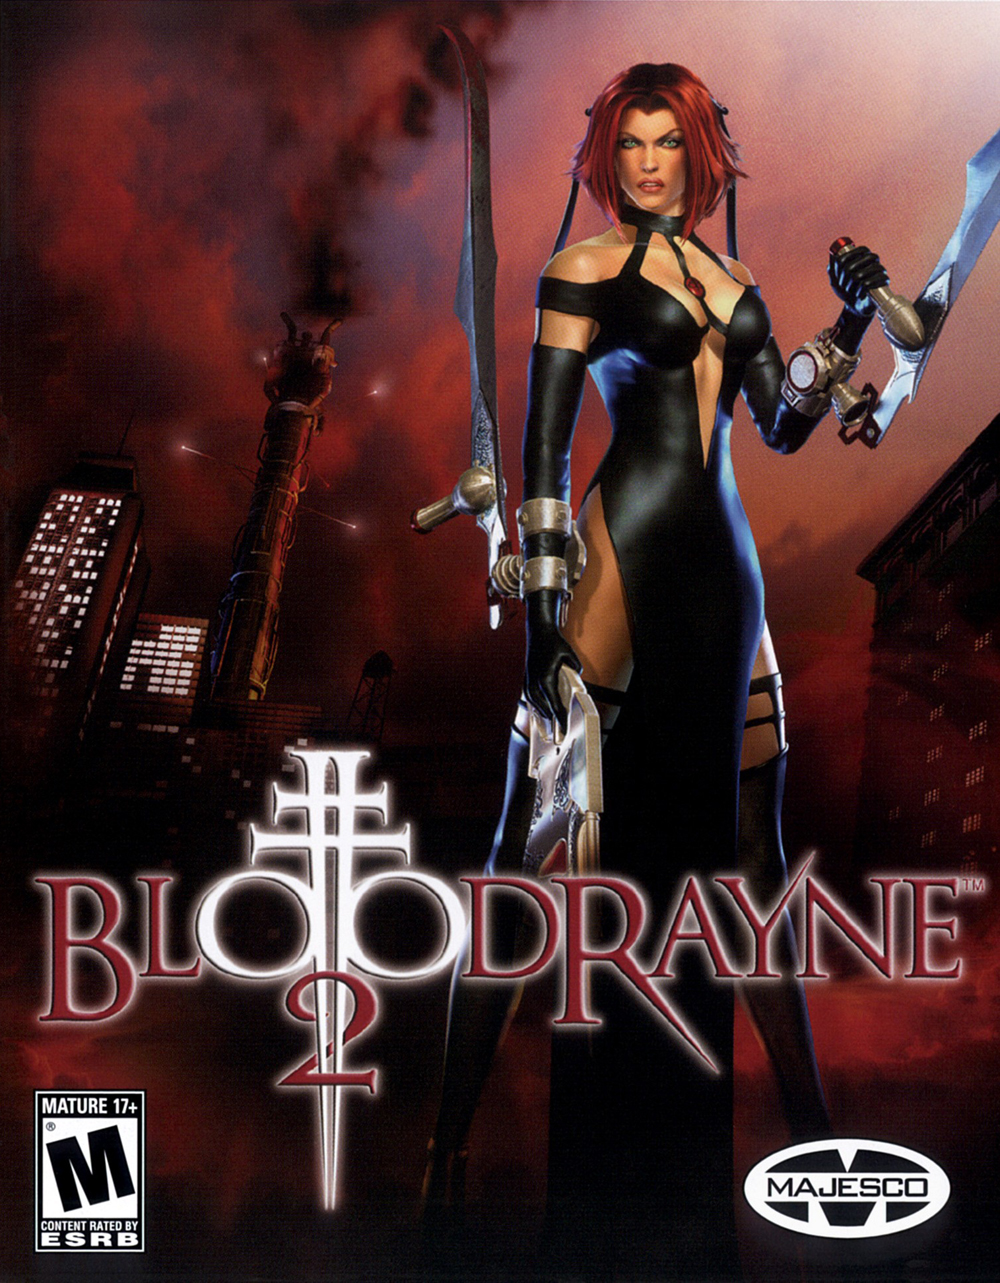 Bloodrayne #13